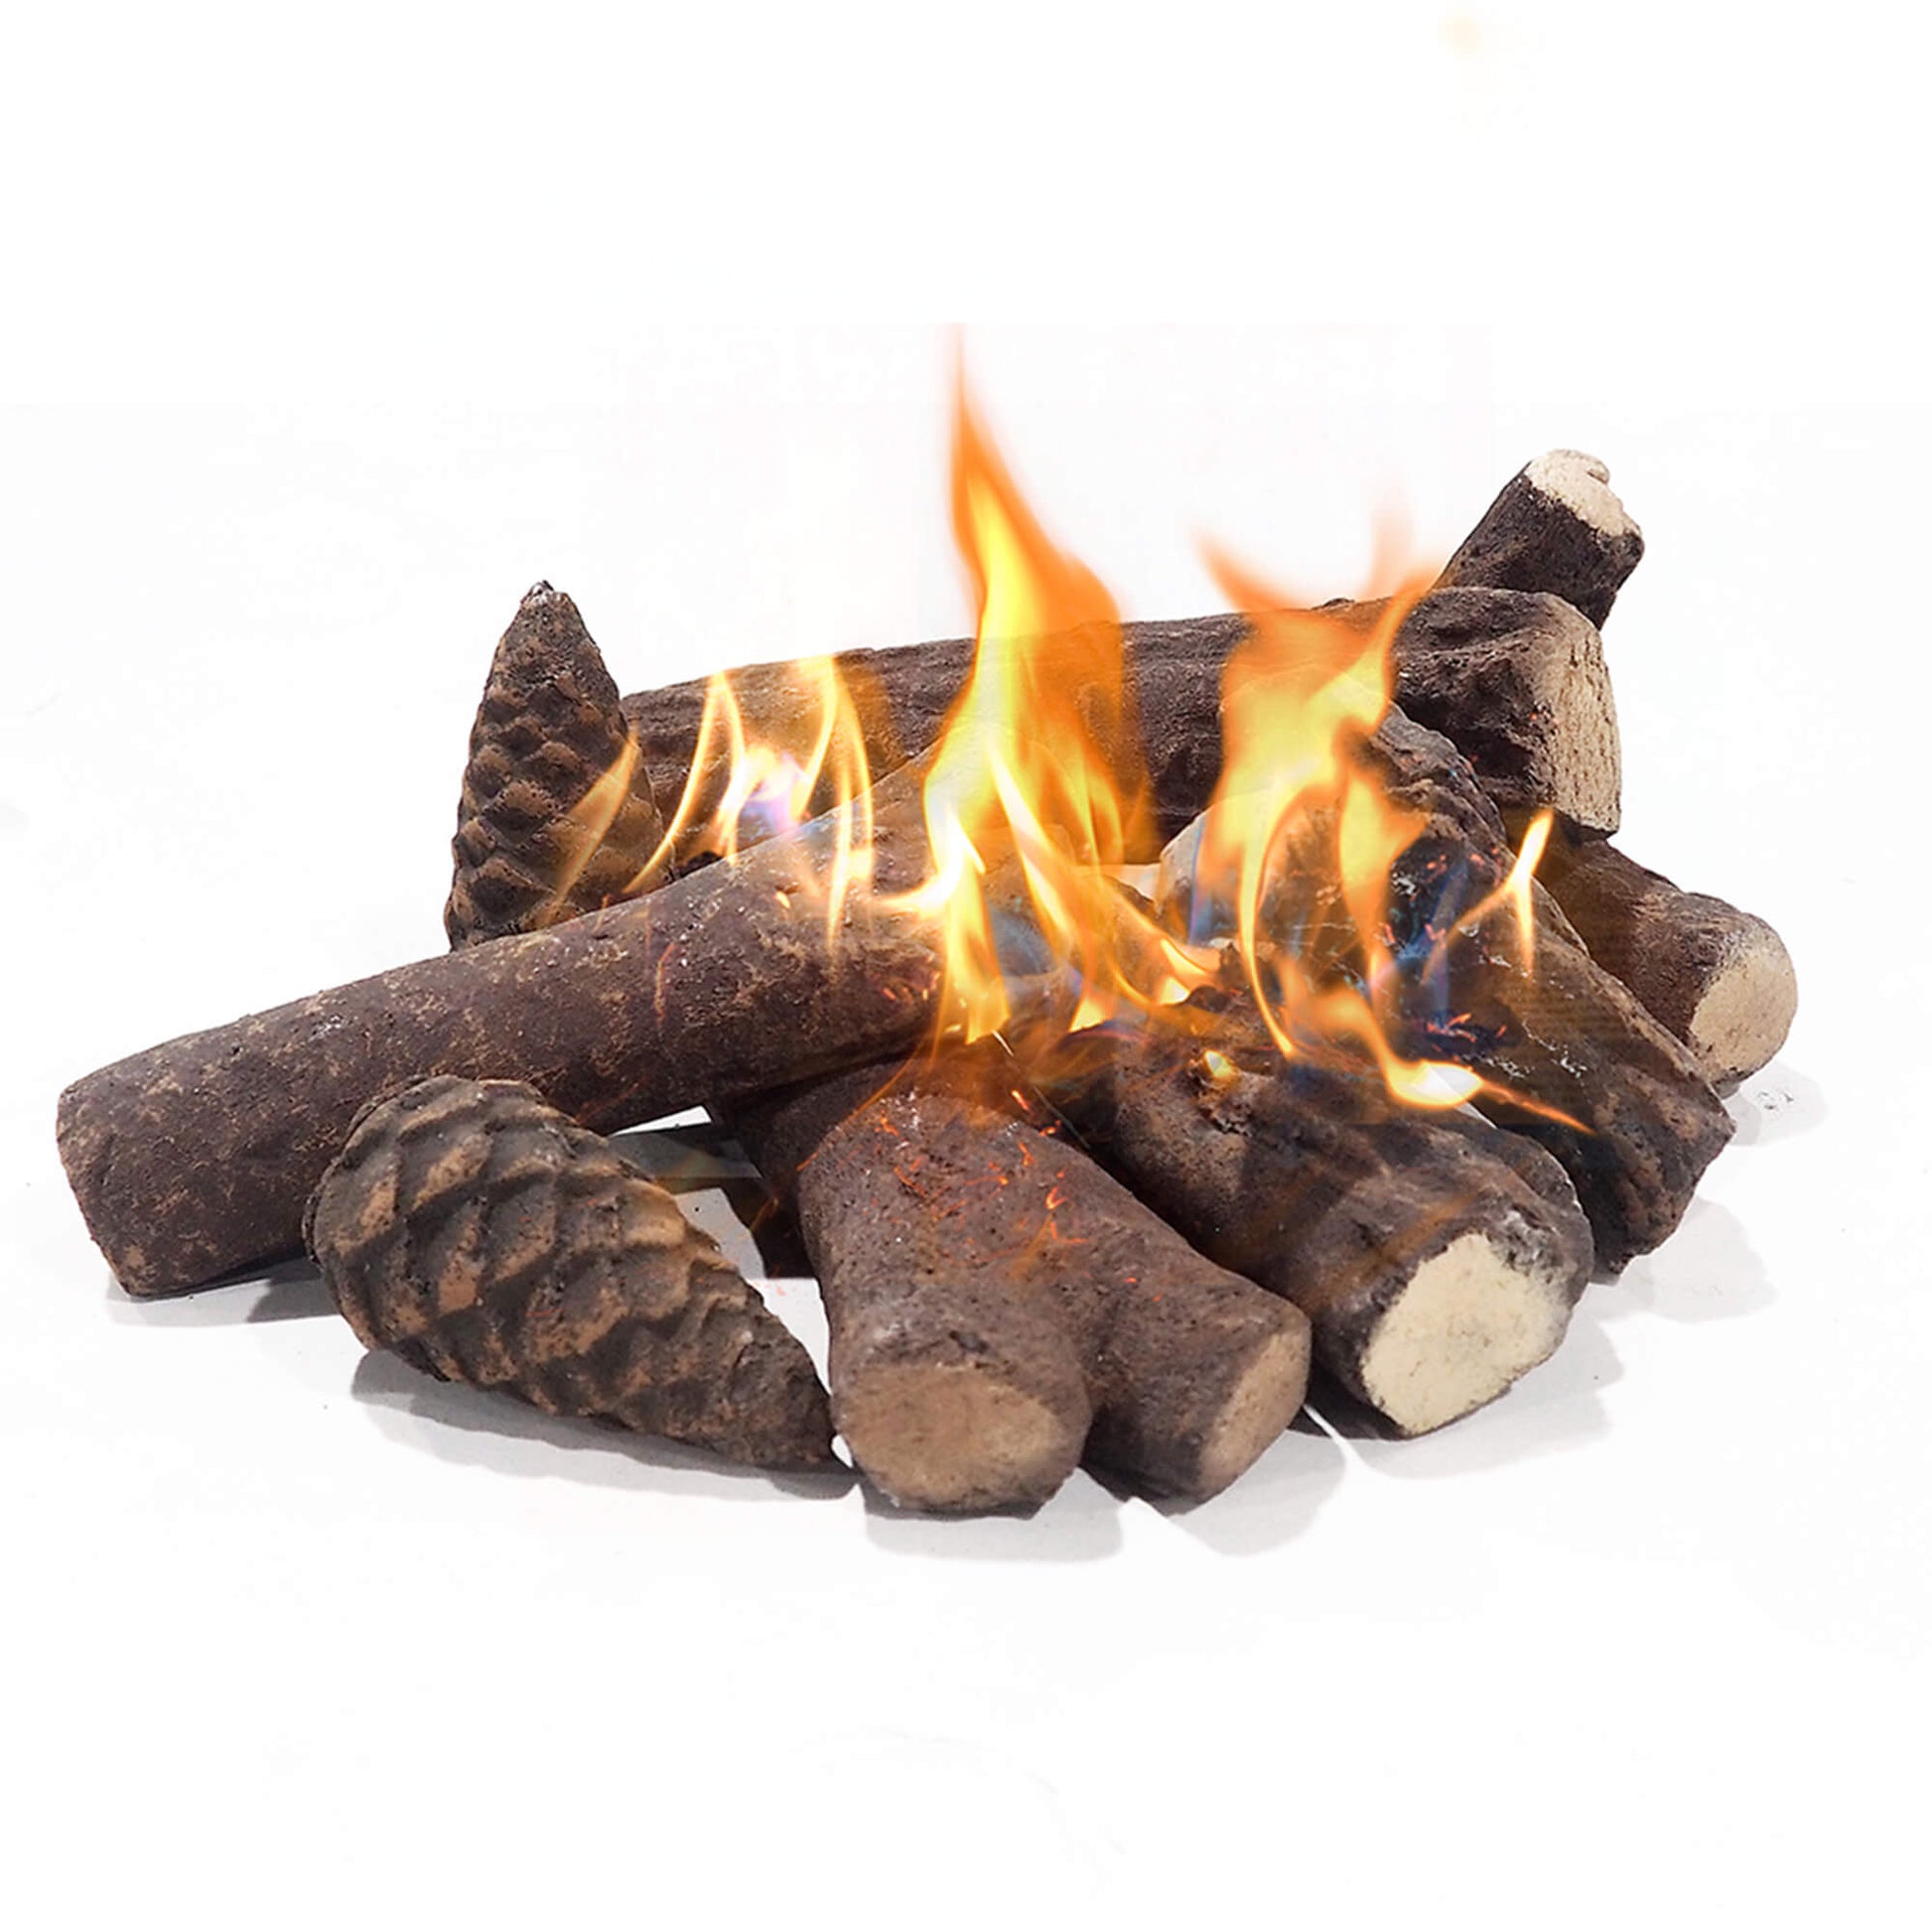 Fireplace Logs Ceramic Woods / Ceramic Logs / Fire pit Logs Set of 9